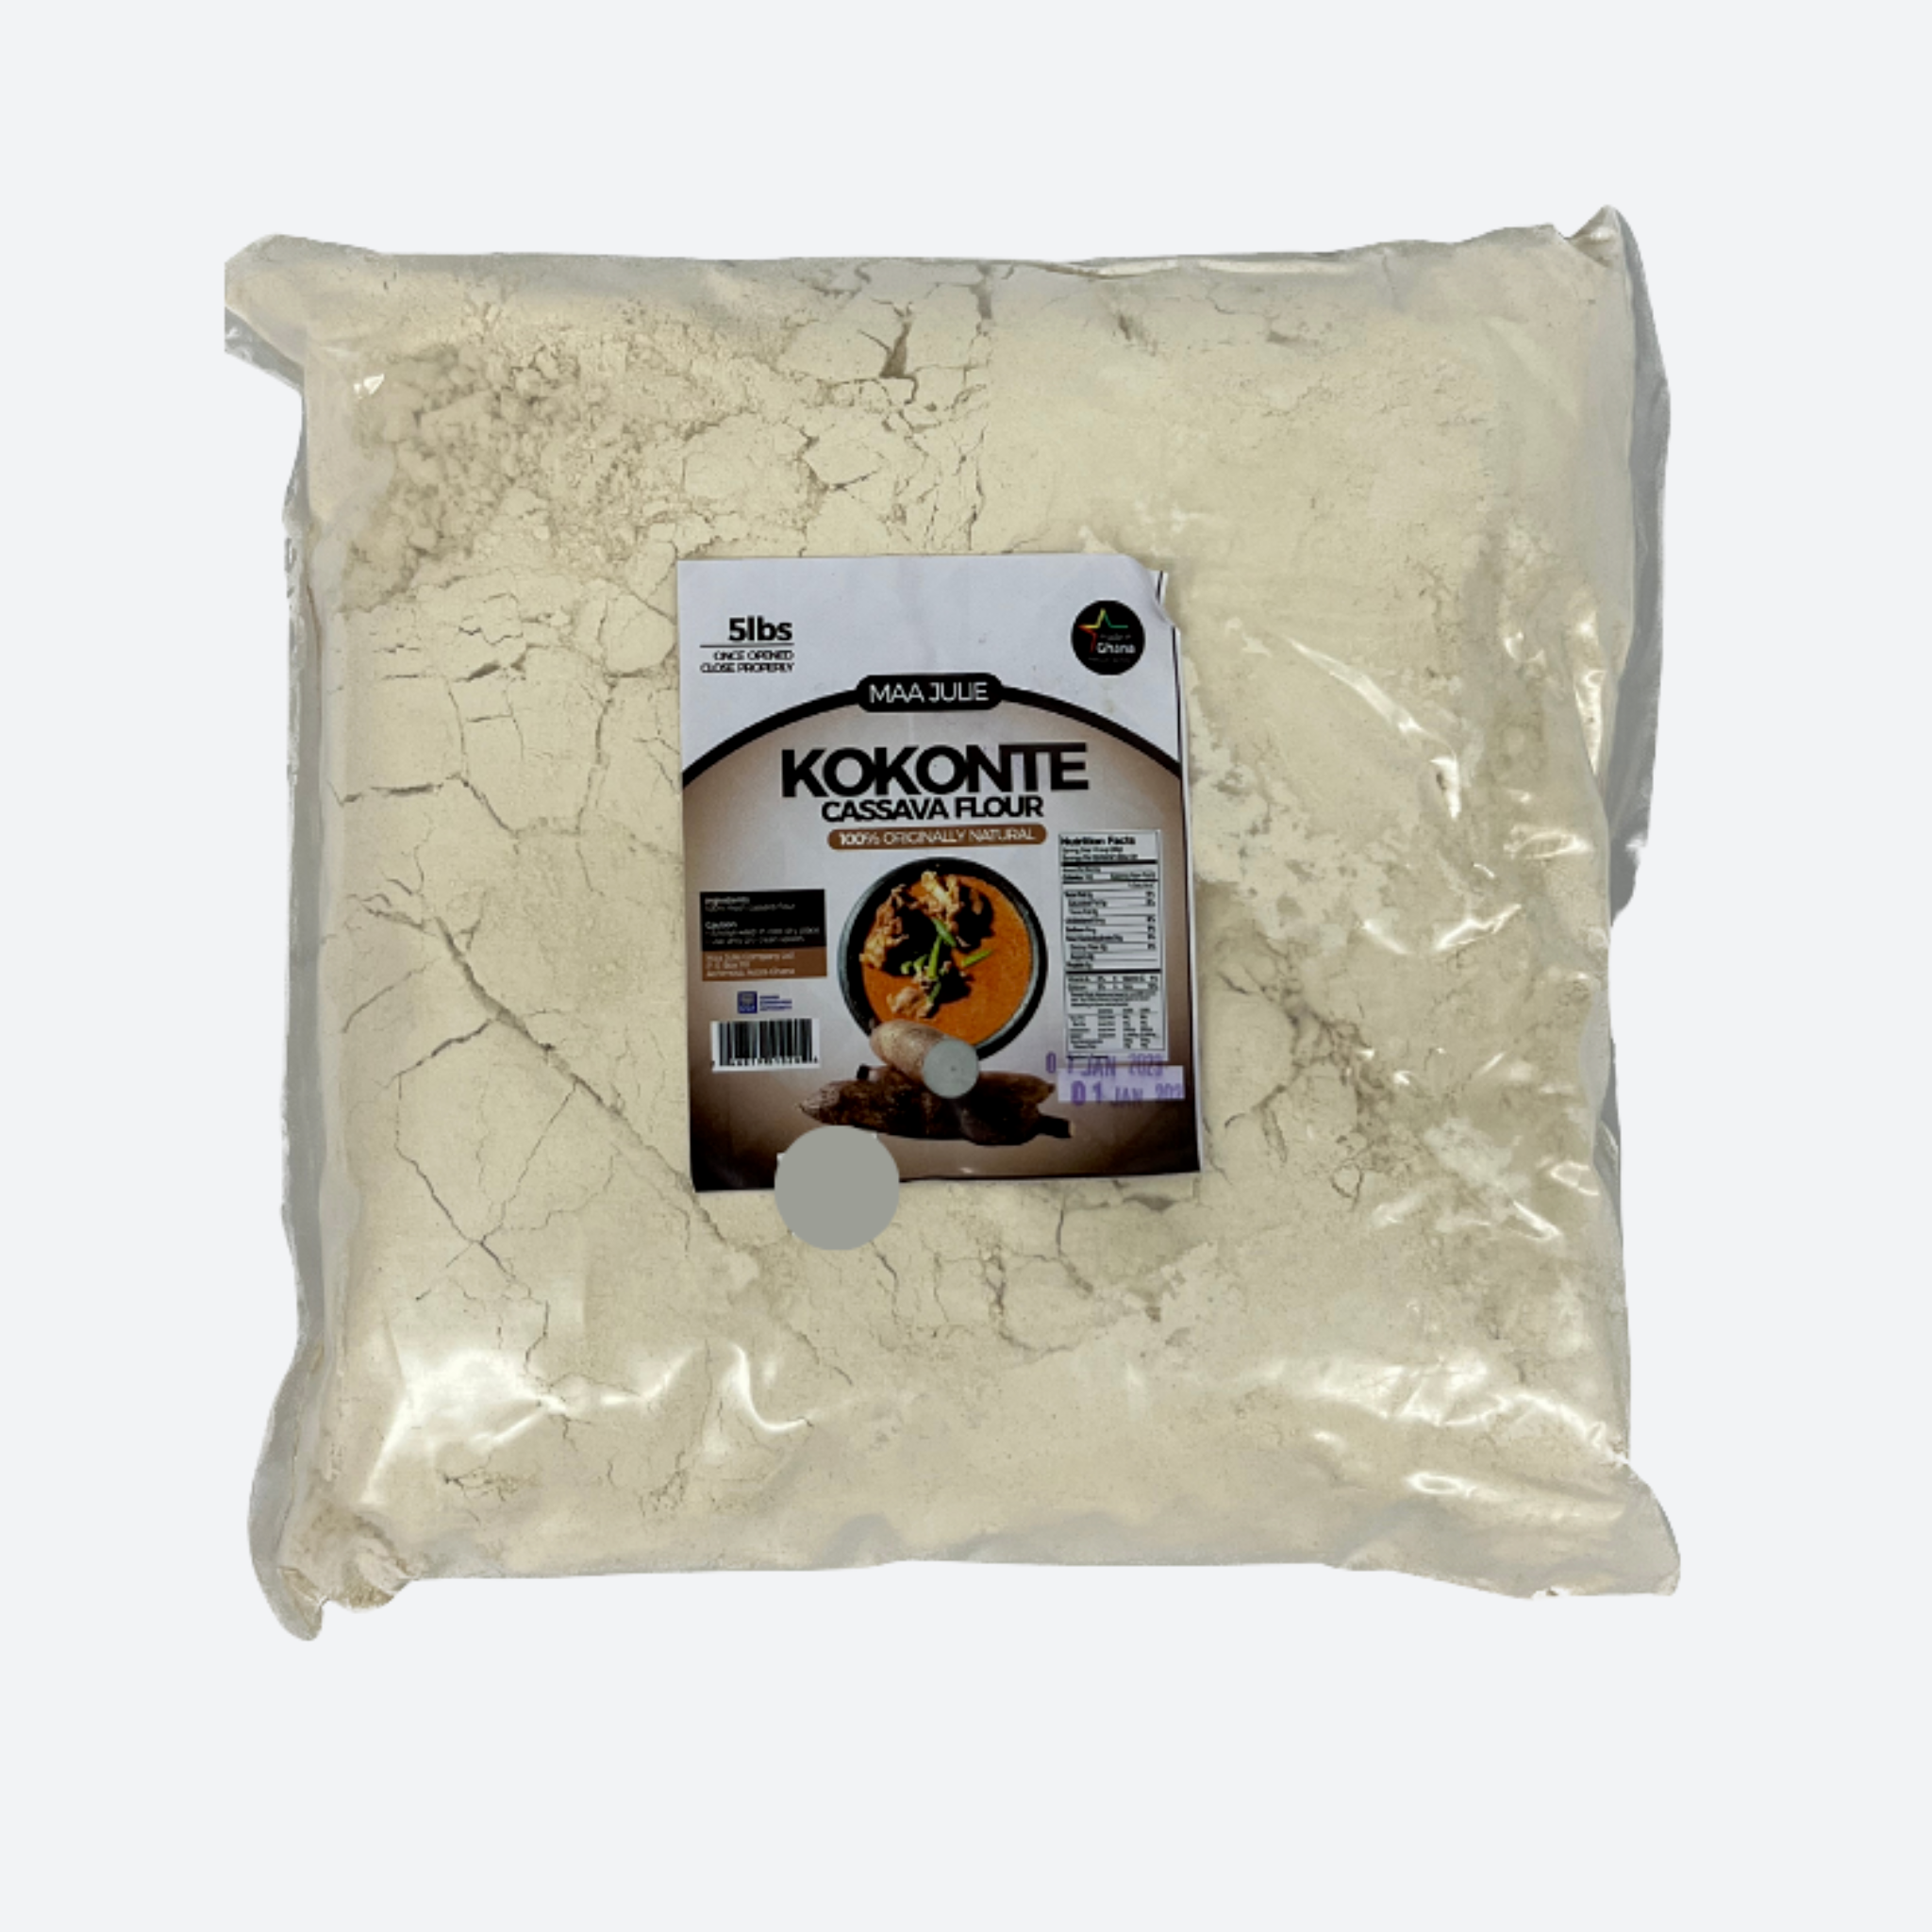 Maa Julie Kokonte Cassava Flour - 5lbs